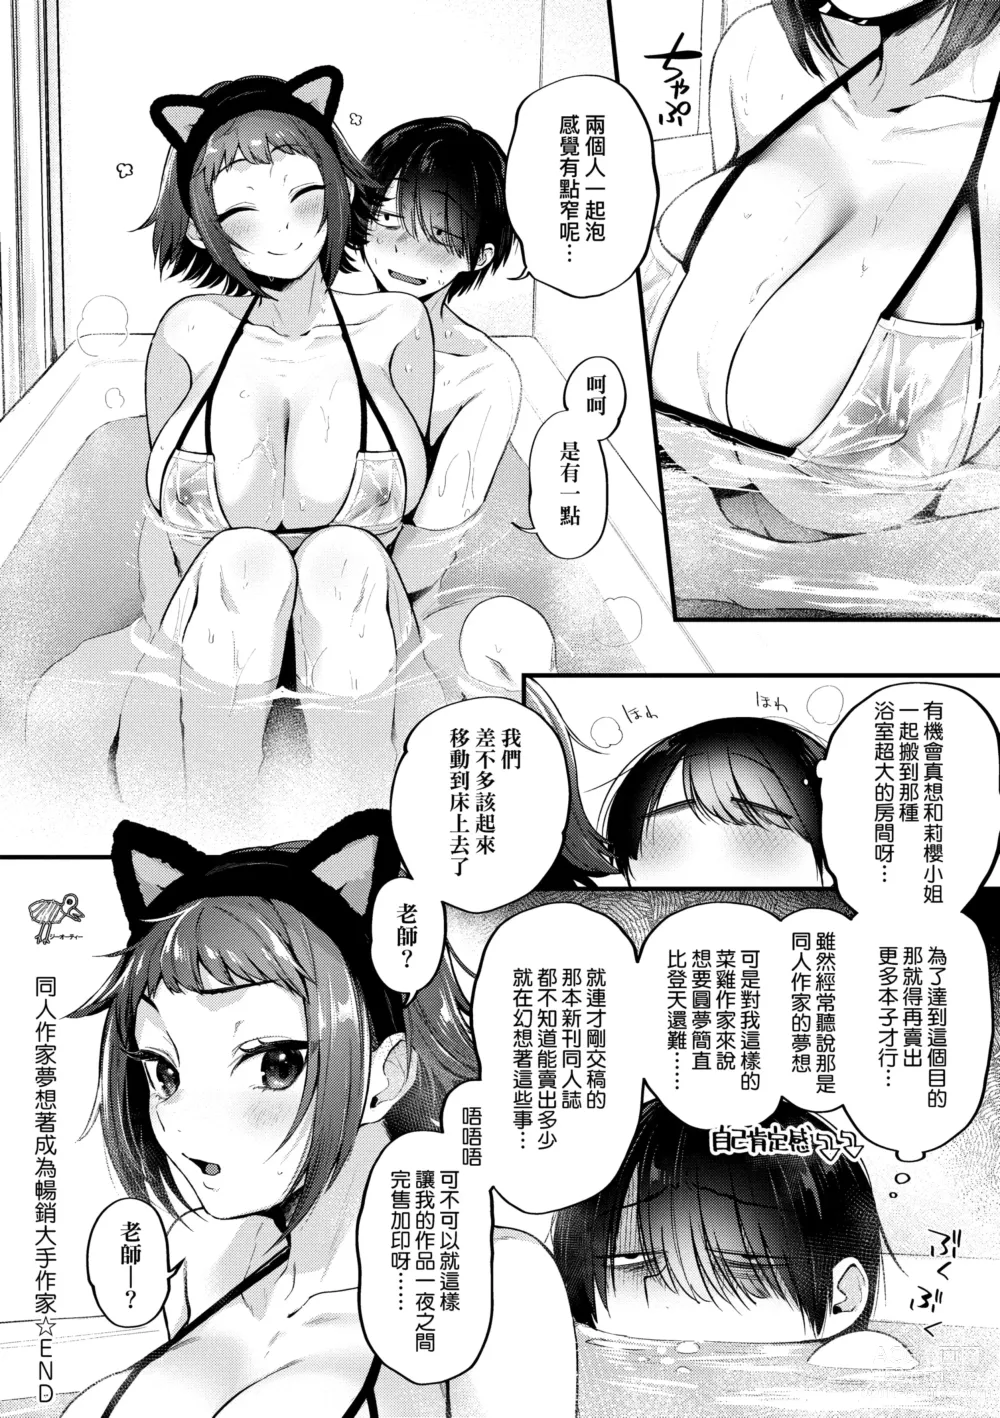 Page 226 of manga 同人作家夢想著能夠角色扮演SEX 特裝版 (decensored)